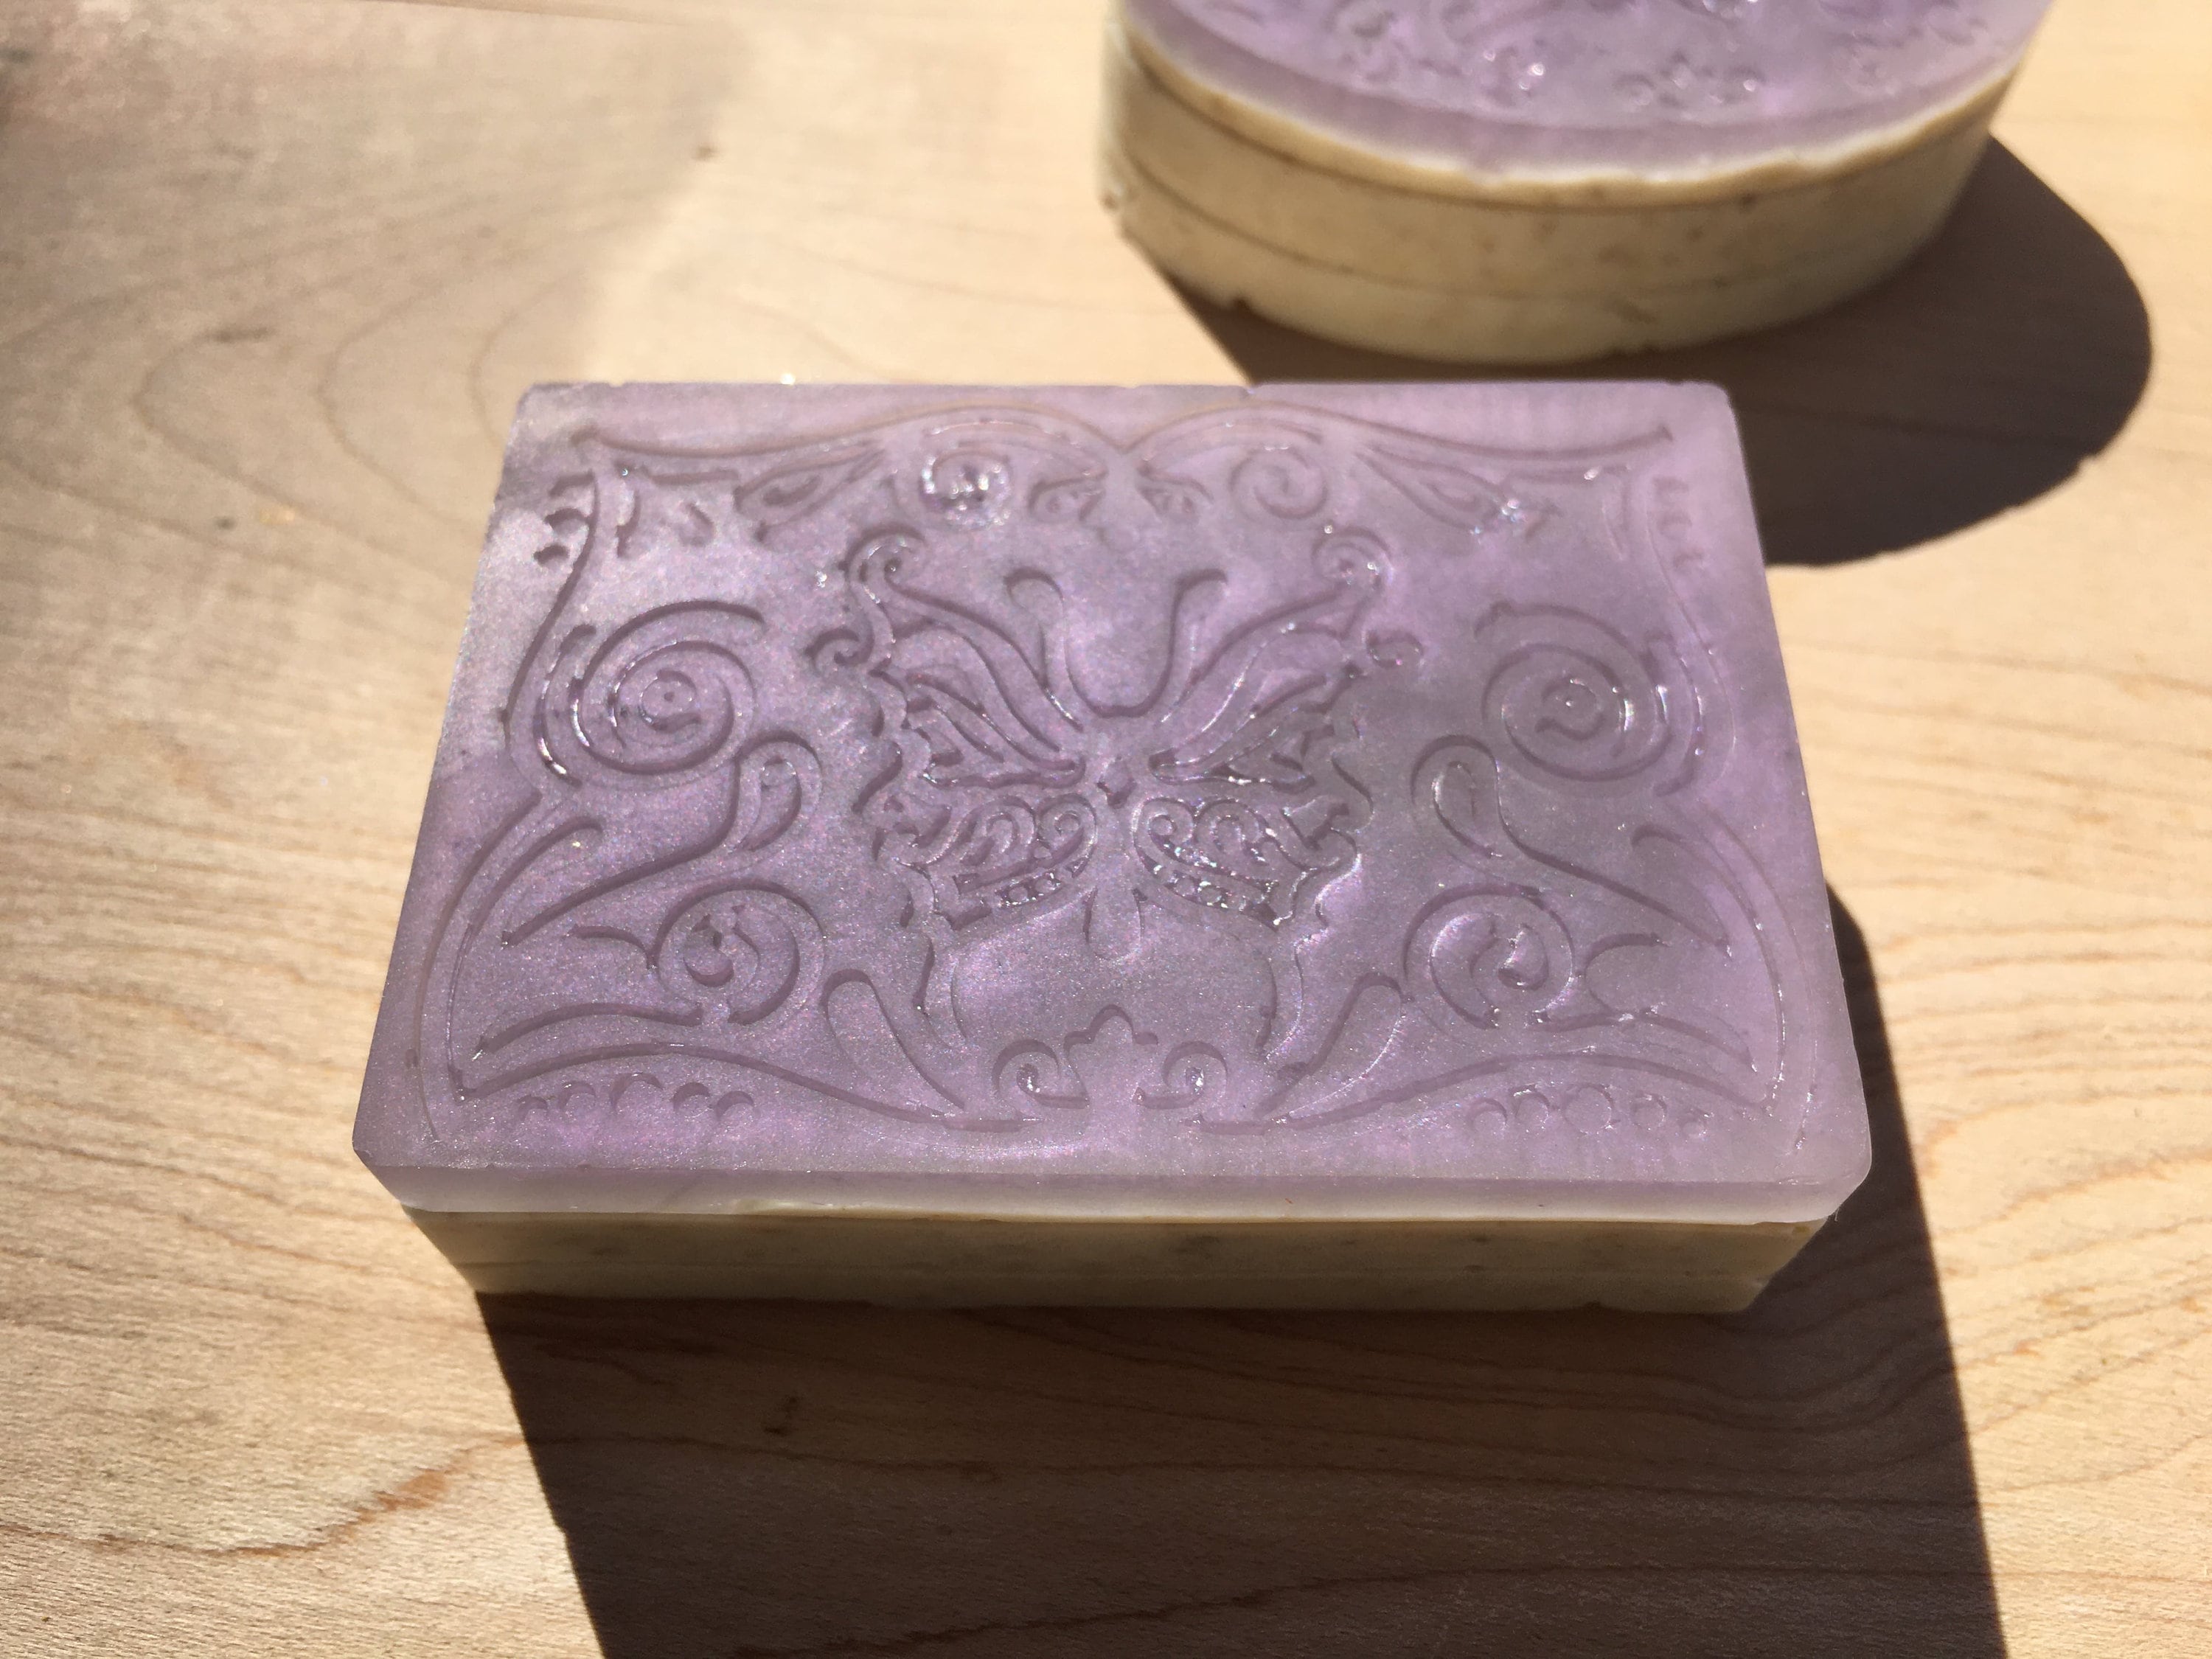 Lavender Oatmeal Goats Milk Soap